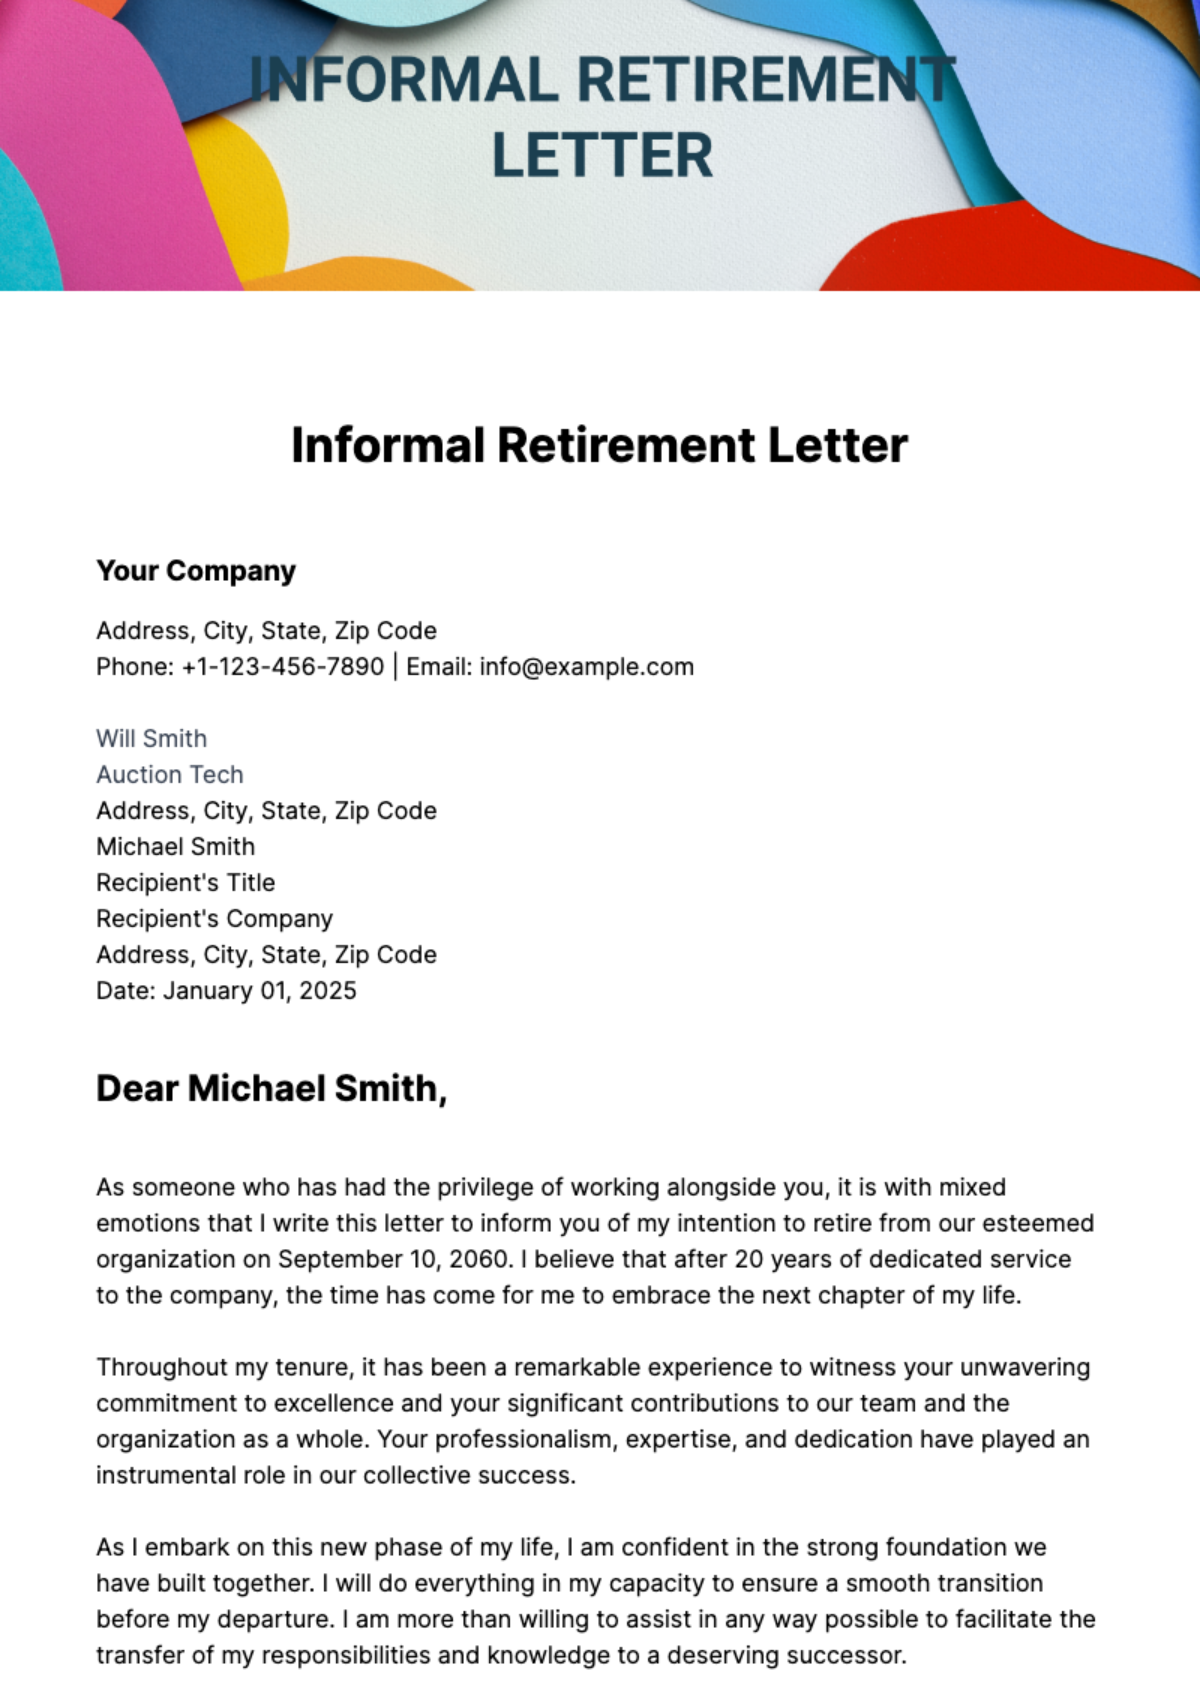 Free Informal Retirement Letter Template